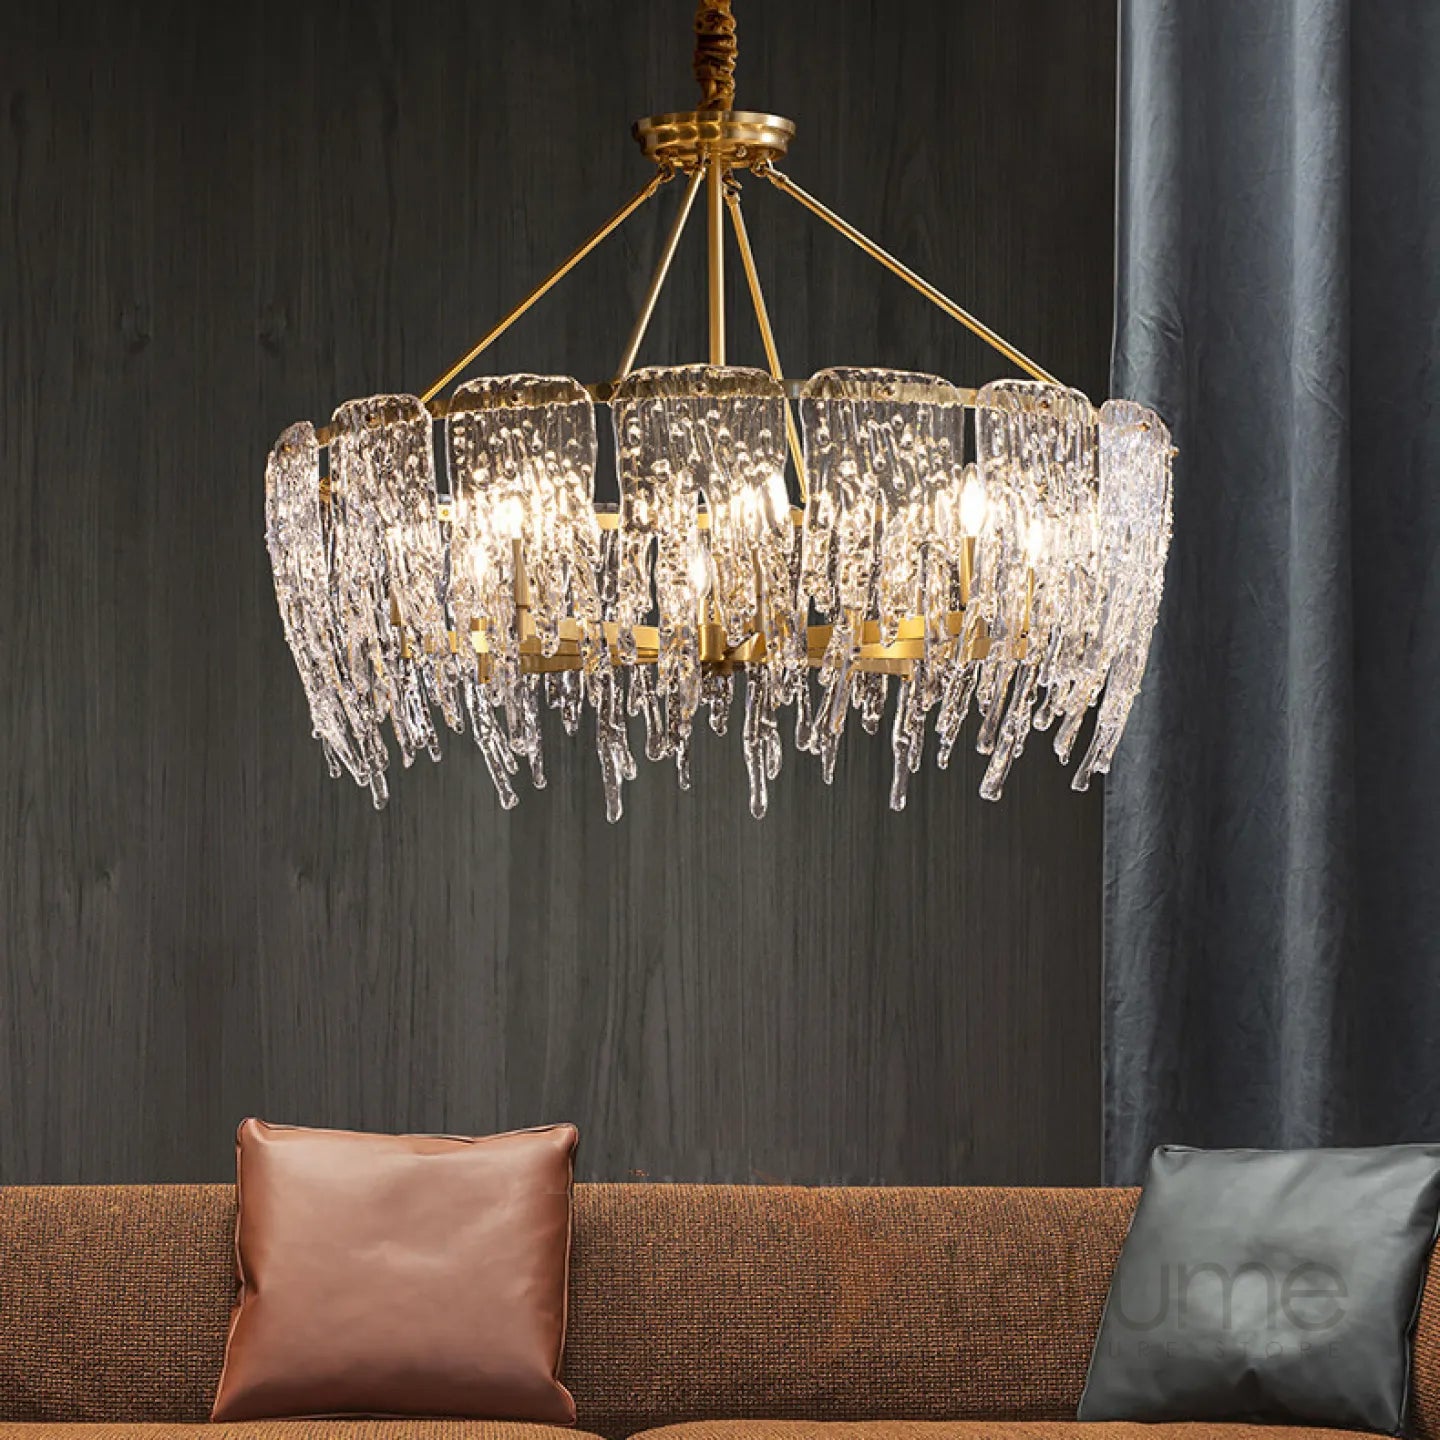 Hdc 600mm Light luxury glass living room dining room duplex floor master bedroom post-modern creative lighting ice cube chandelier